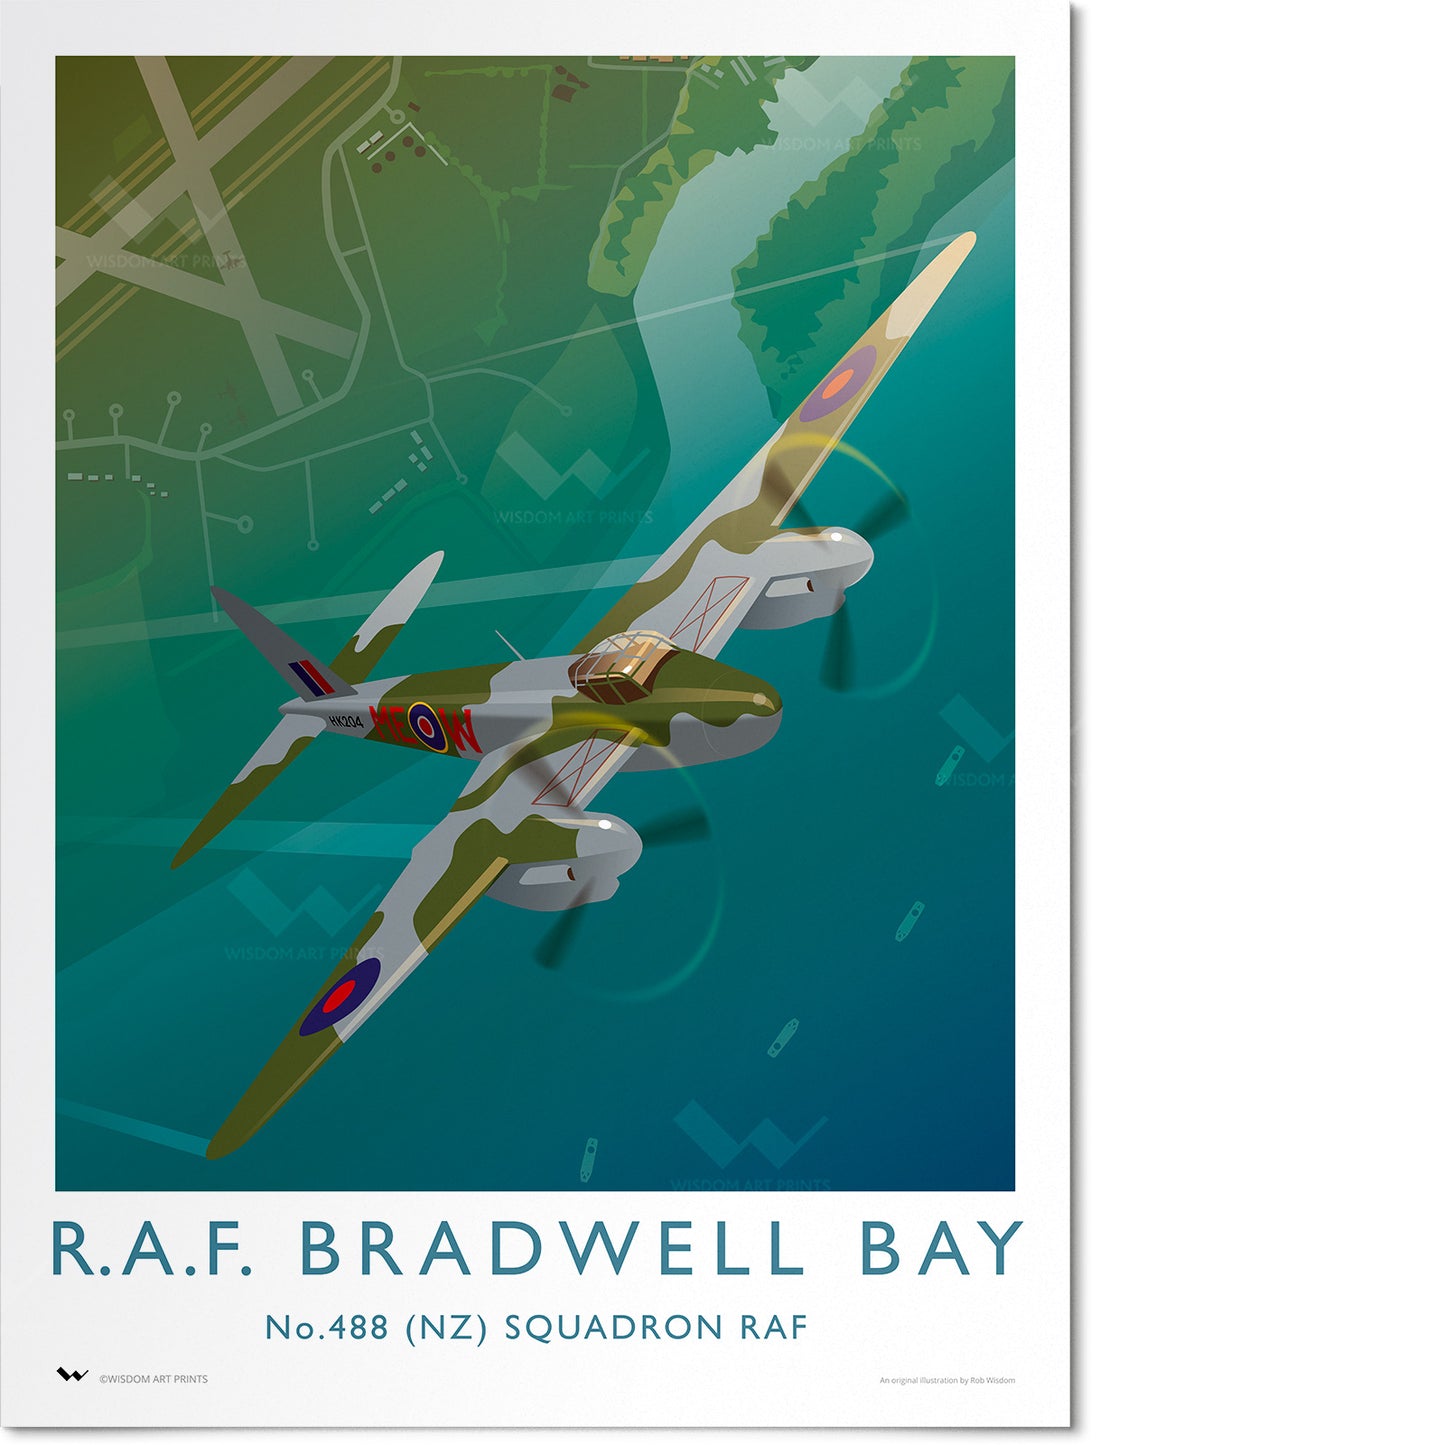 Illustration of a De Havilland Mosquito flying above RAF Bradwell Bay